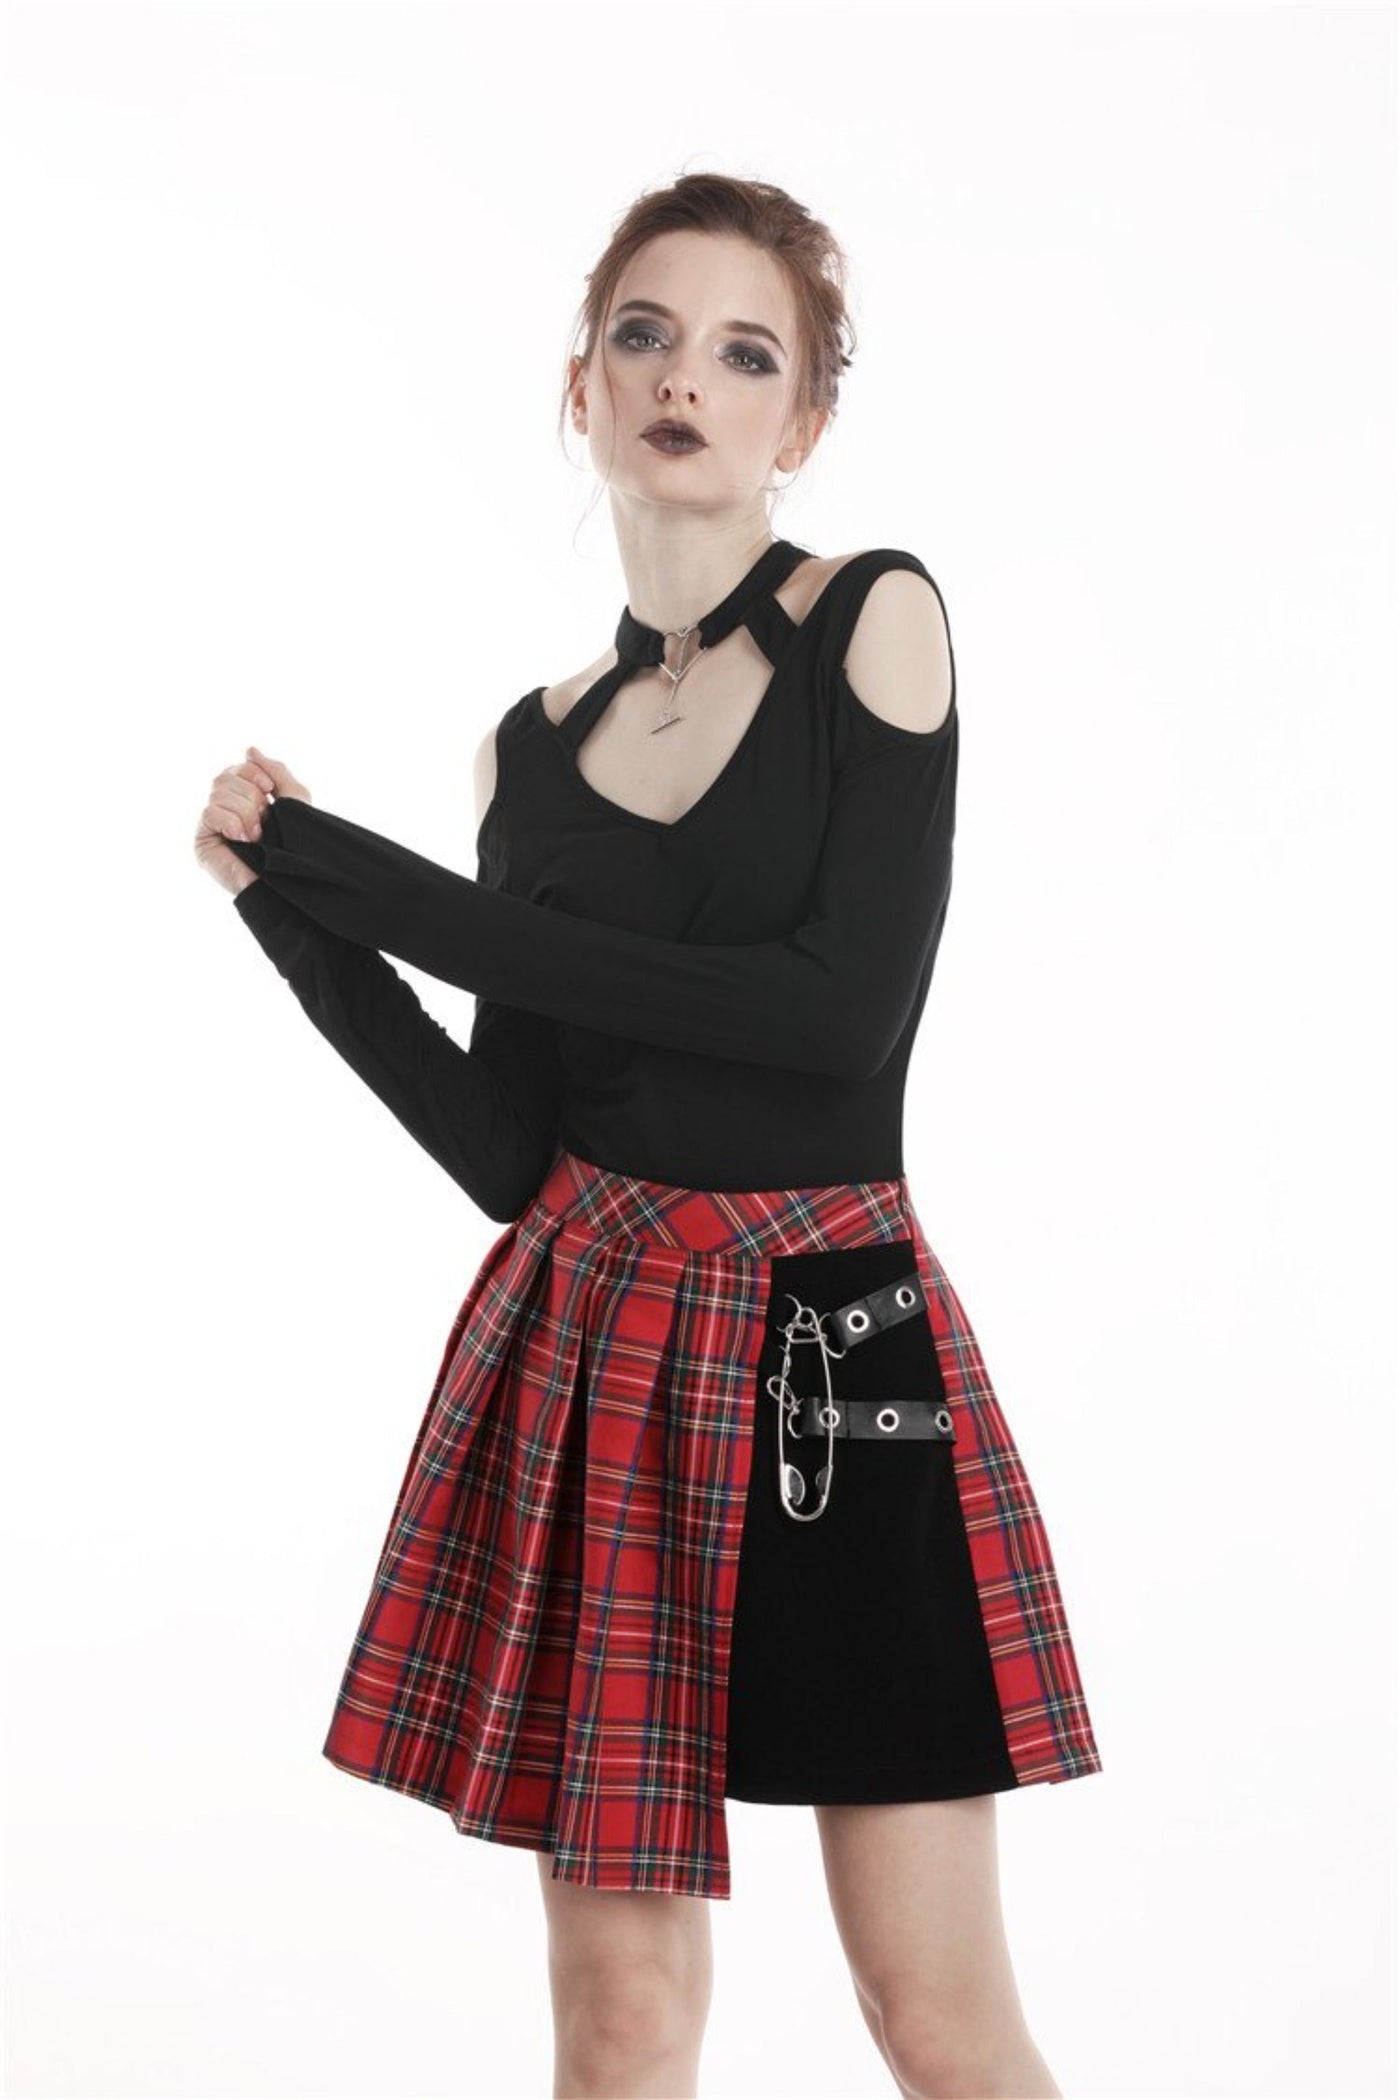 The Punk Plaid Skirt